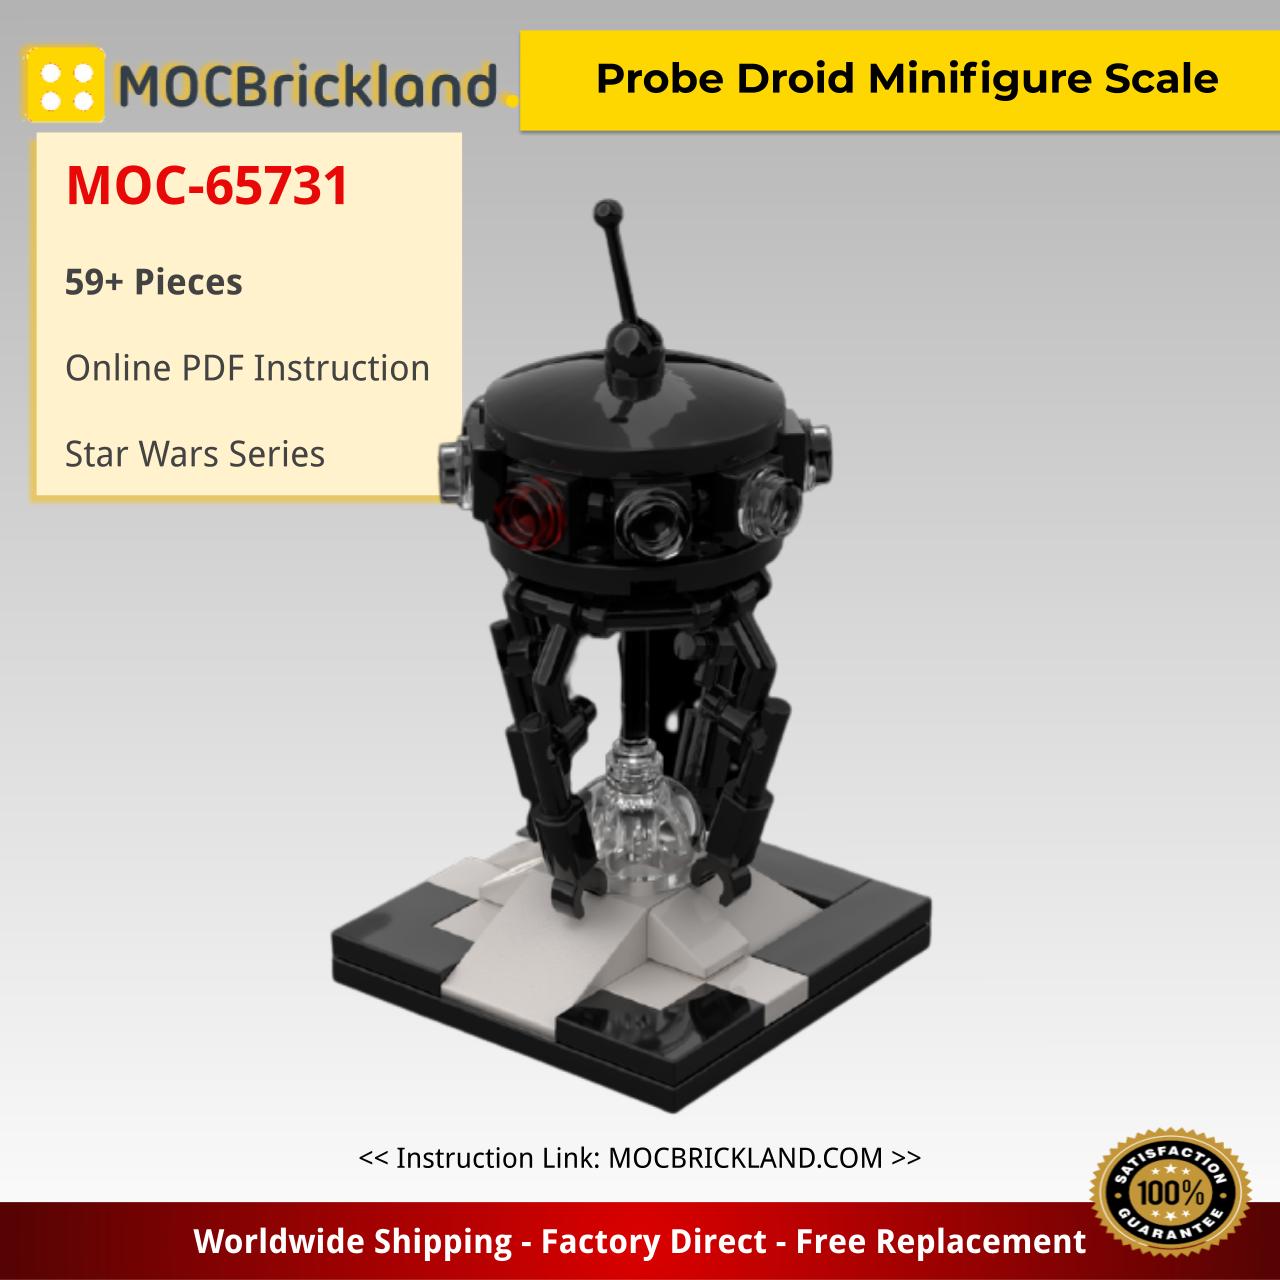 MOCBRICKLAND MOC-65731 Probe Droid Minifigure Scale